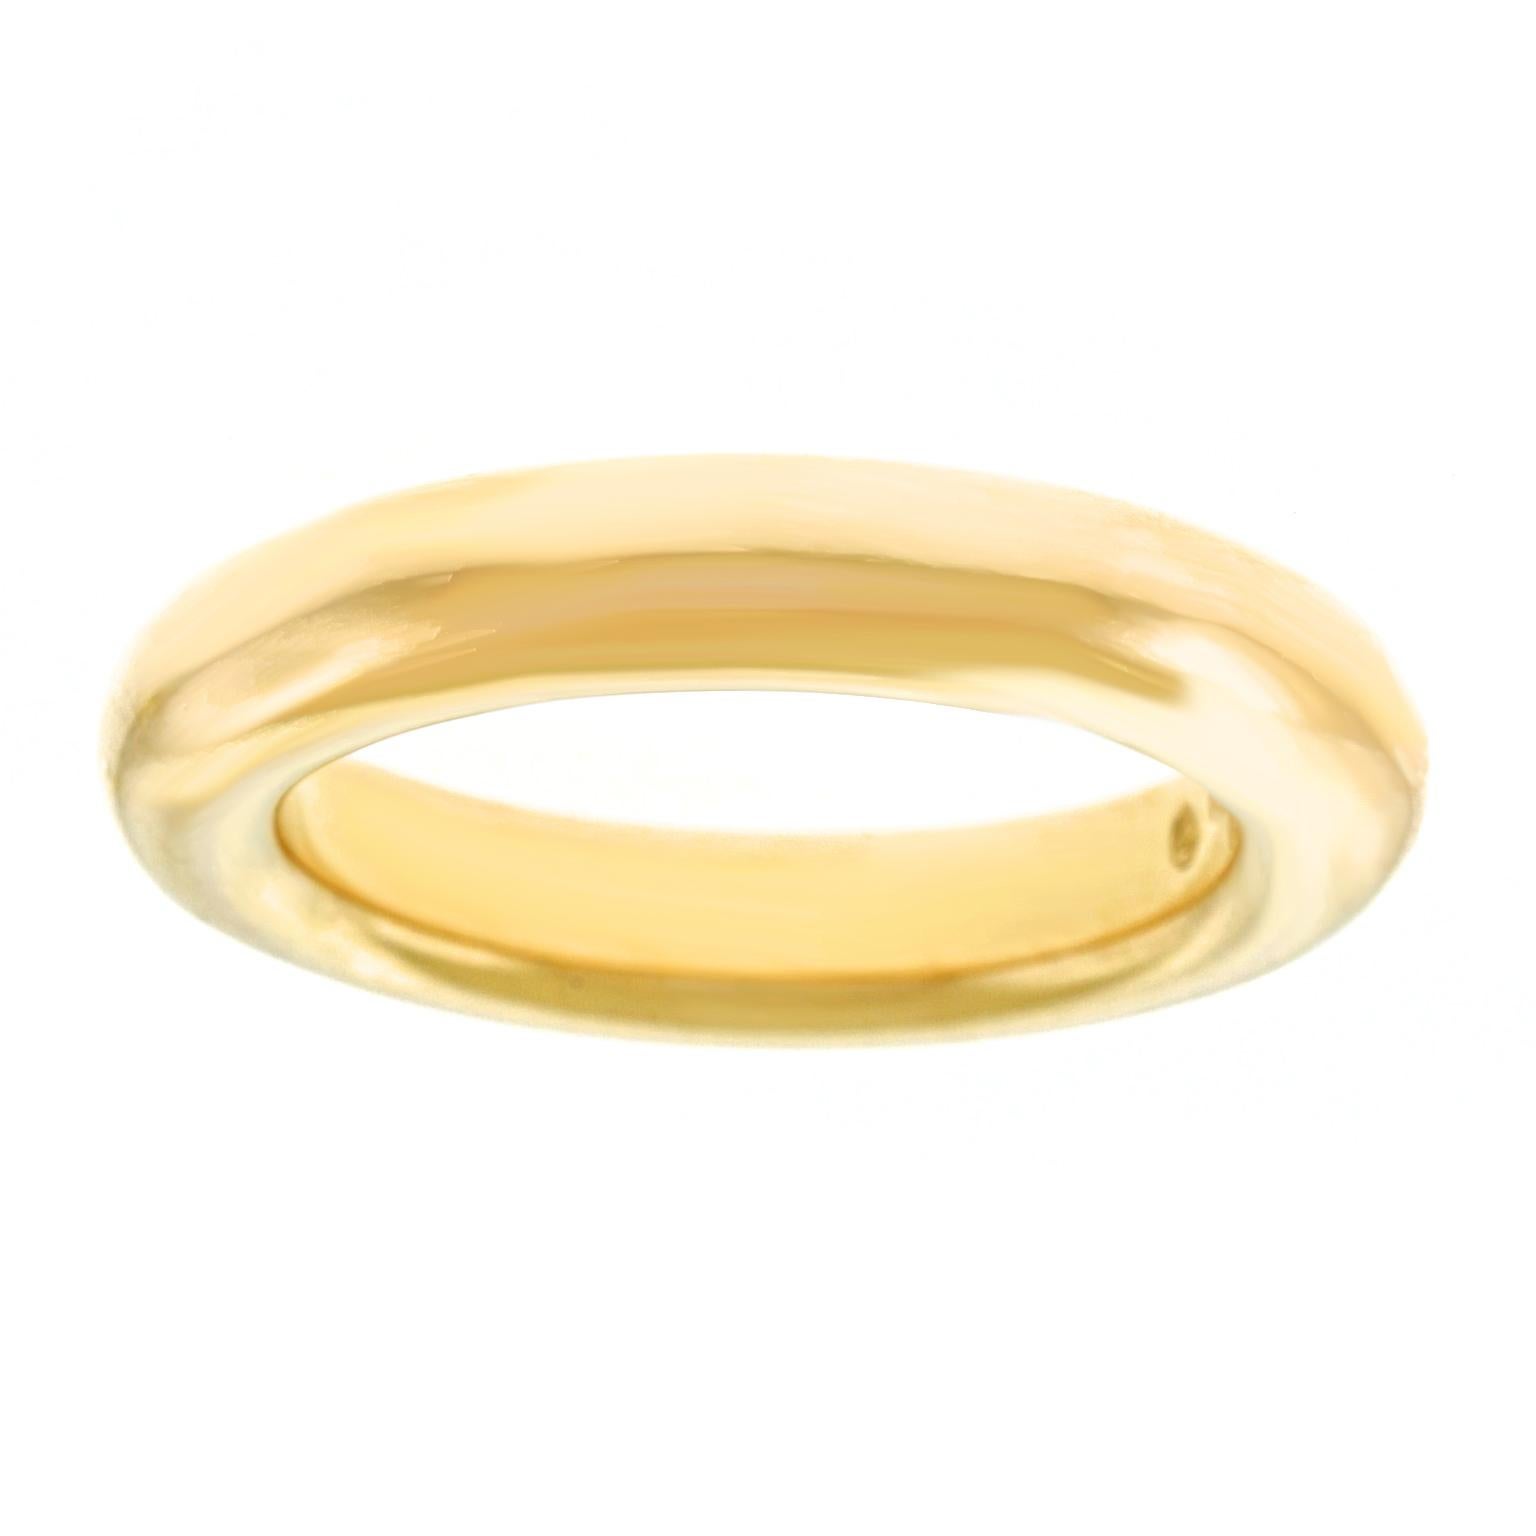 Heavy 18k Polished Gold Ring